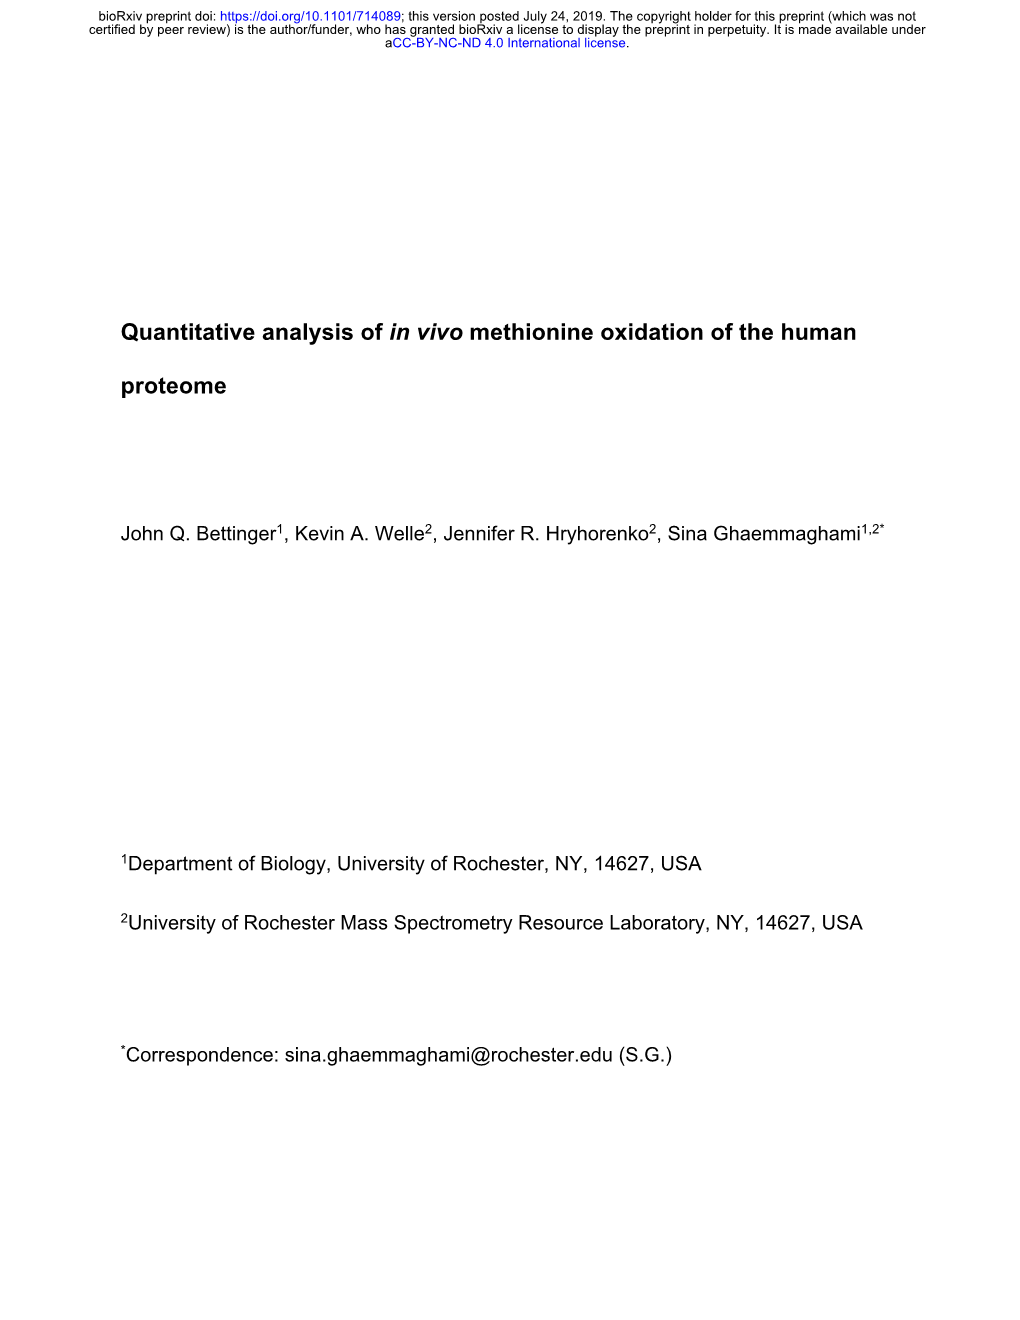 Quantitative Analysis of in Vivo Methionine Oxidation of the Human Proteome